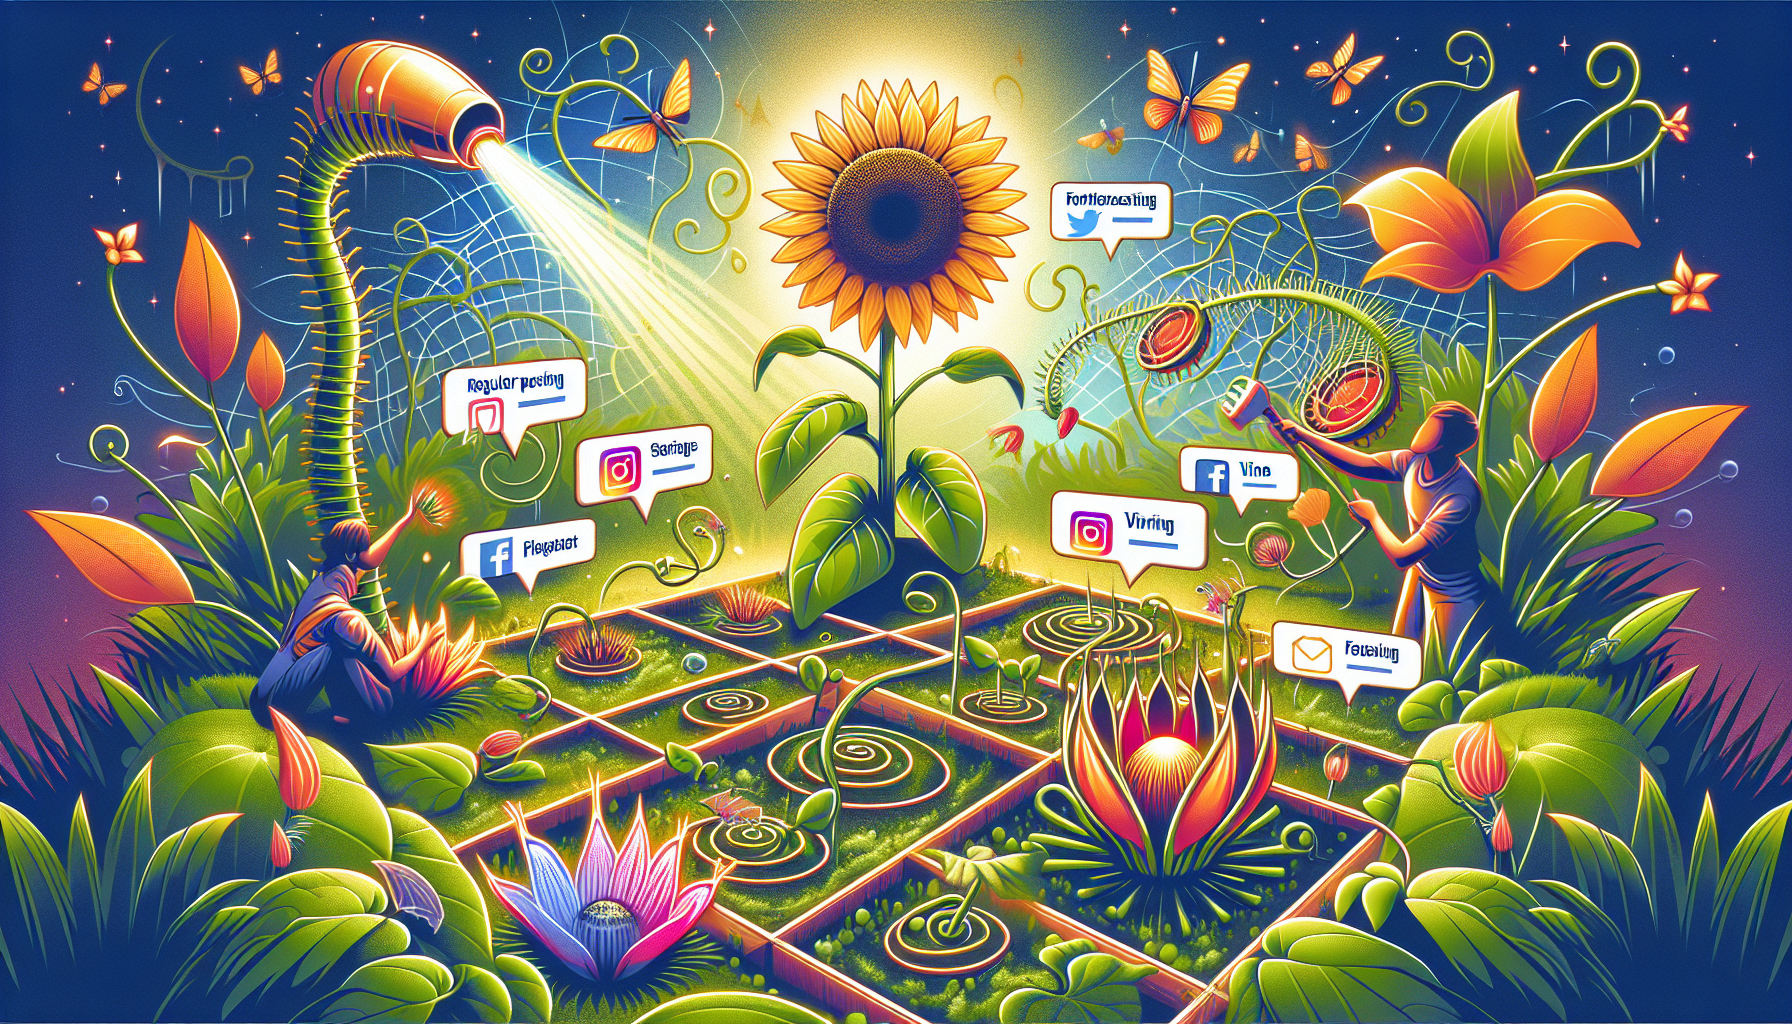 Illustration of organic follower growth strategies